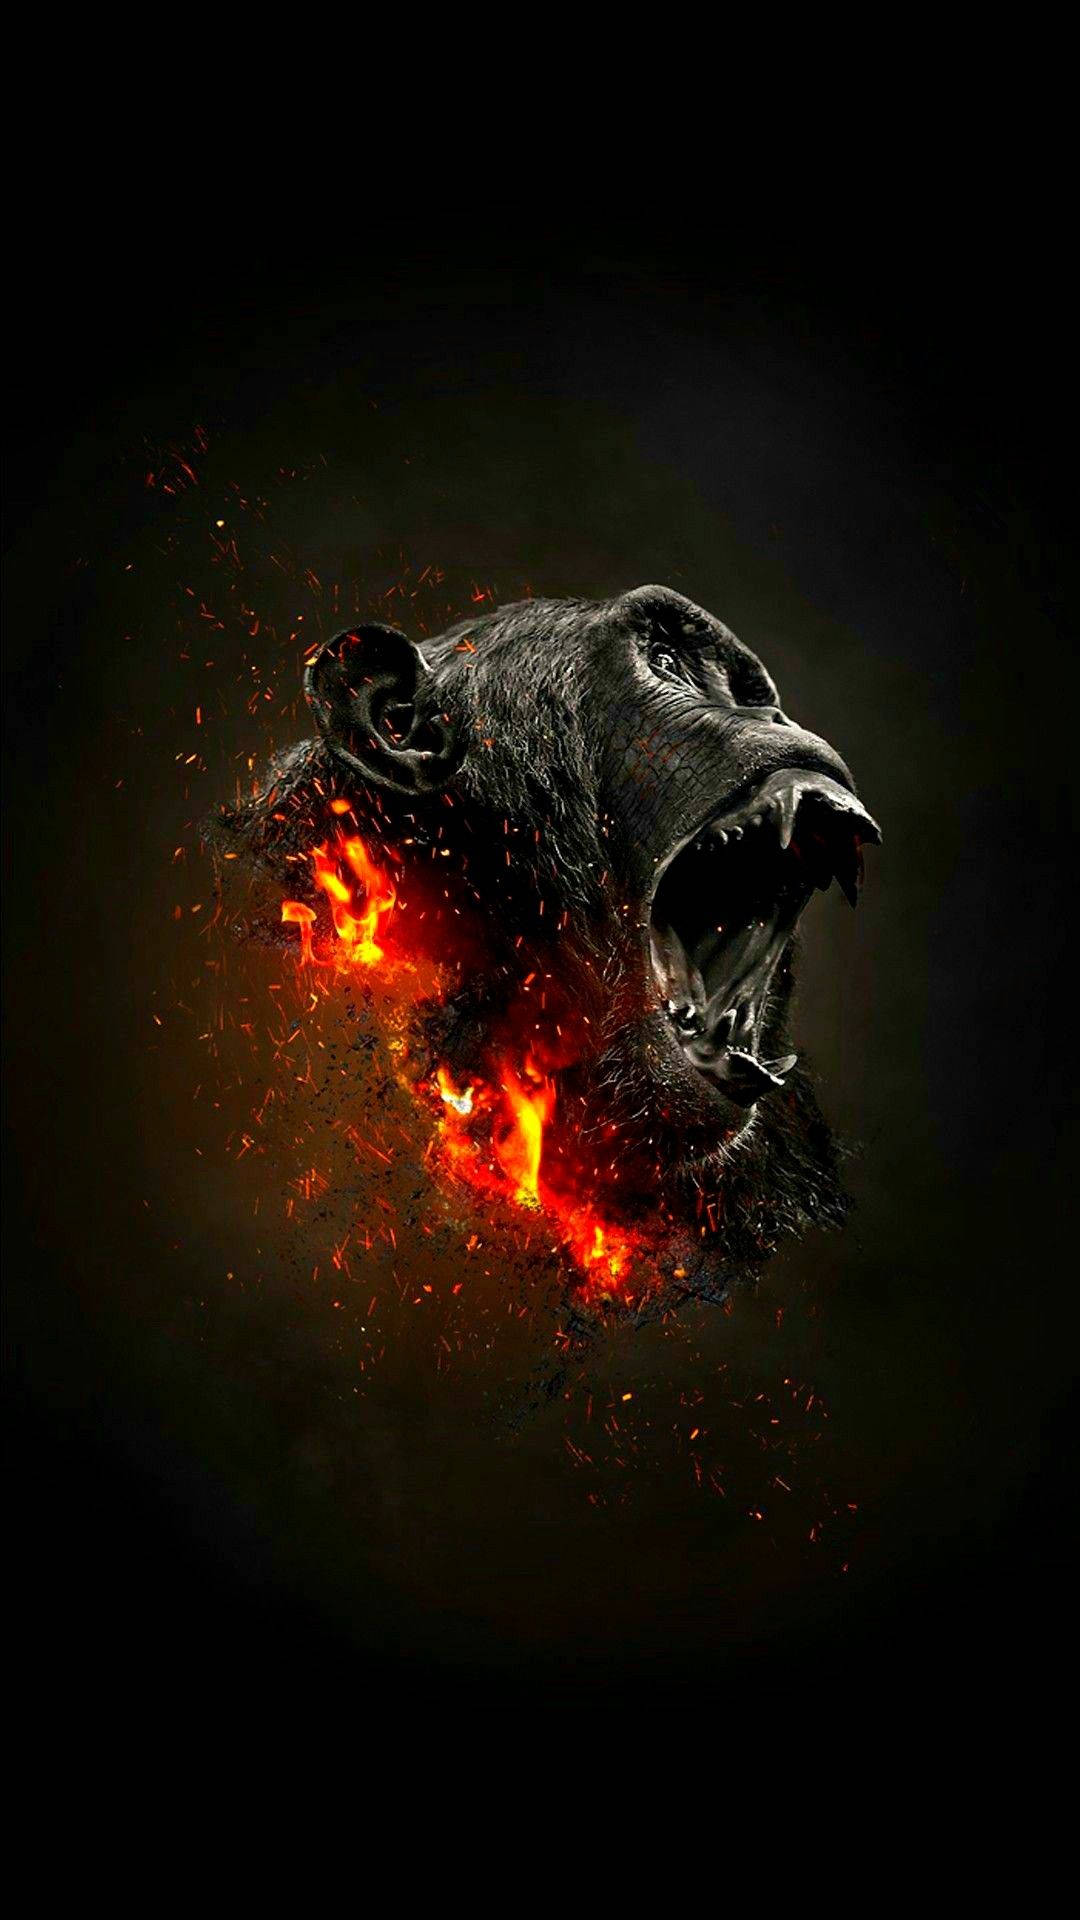 Gorilla's Head In Blazing Fire Background